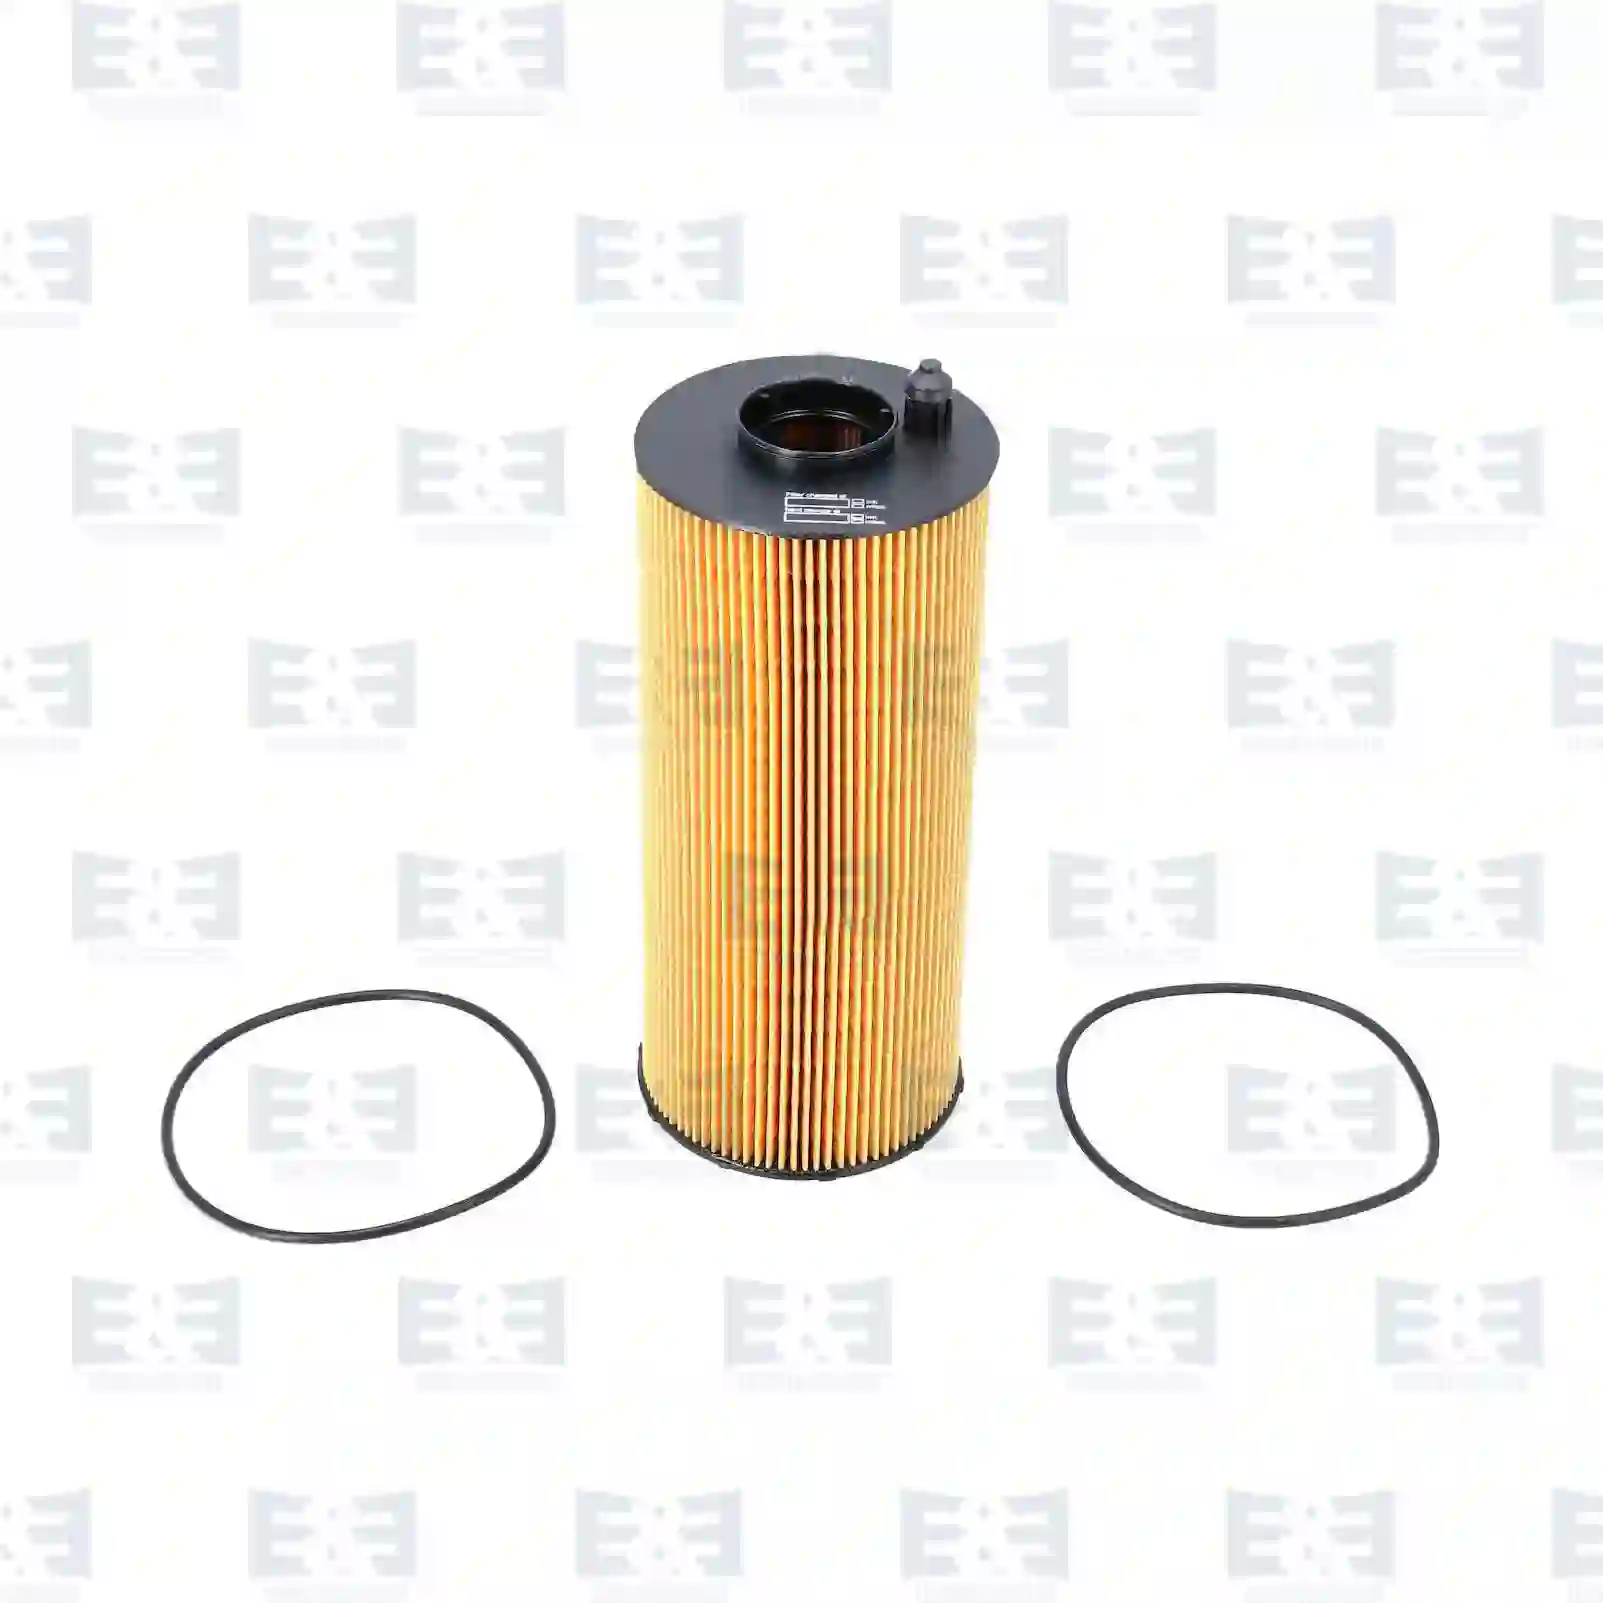  Oil filter insert || E&E Truck Spare Parts | Truck Spare Parts, Auotomotive Spare Parts